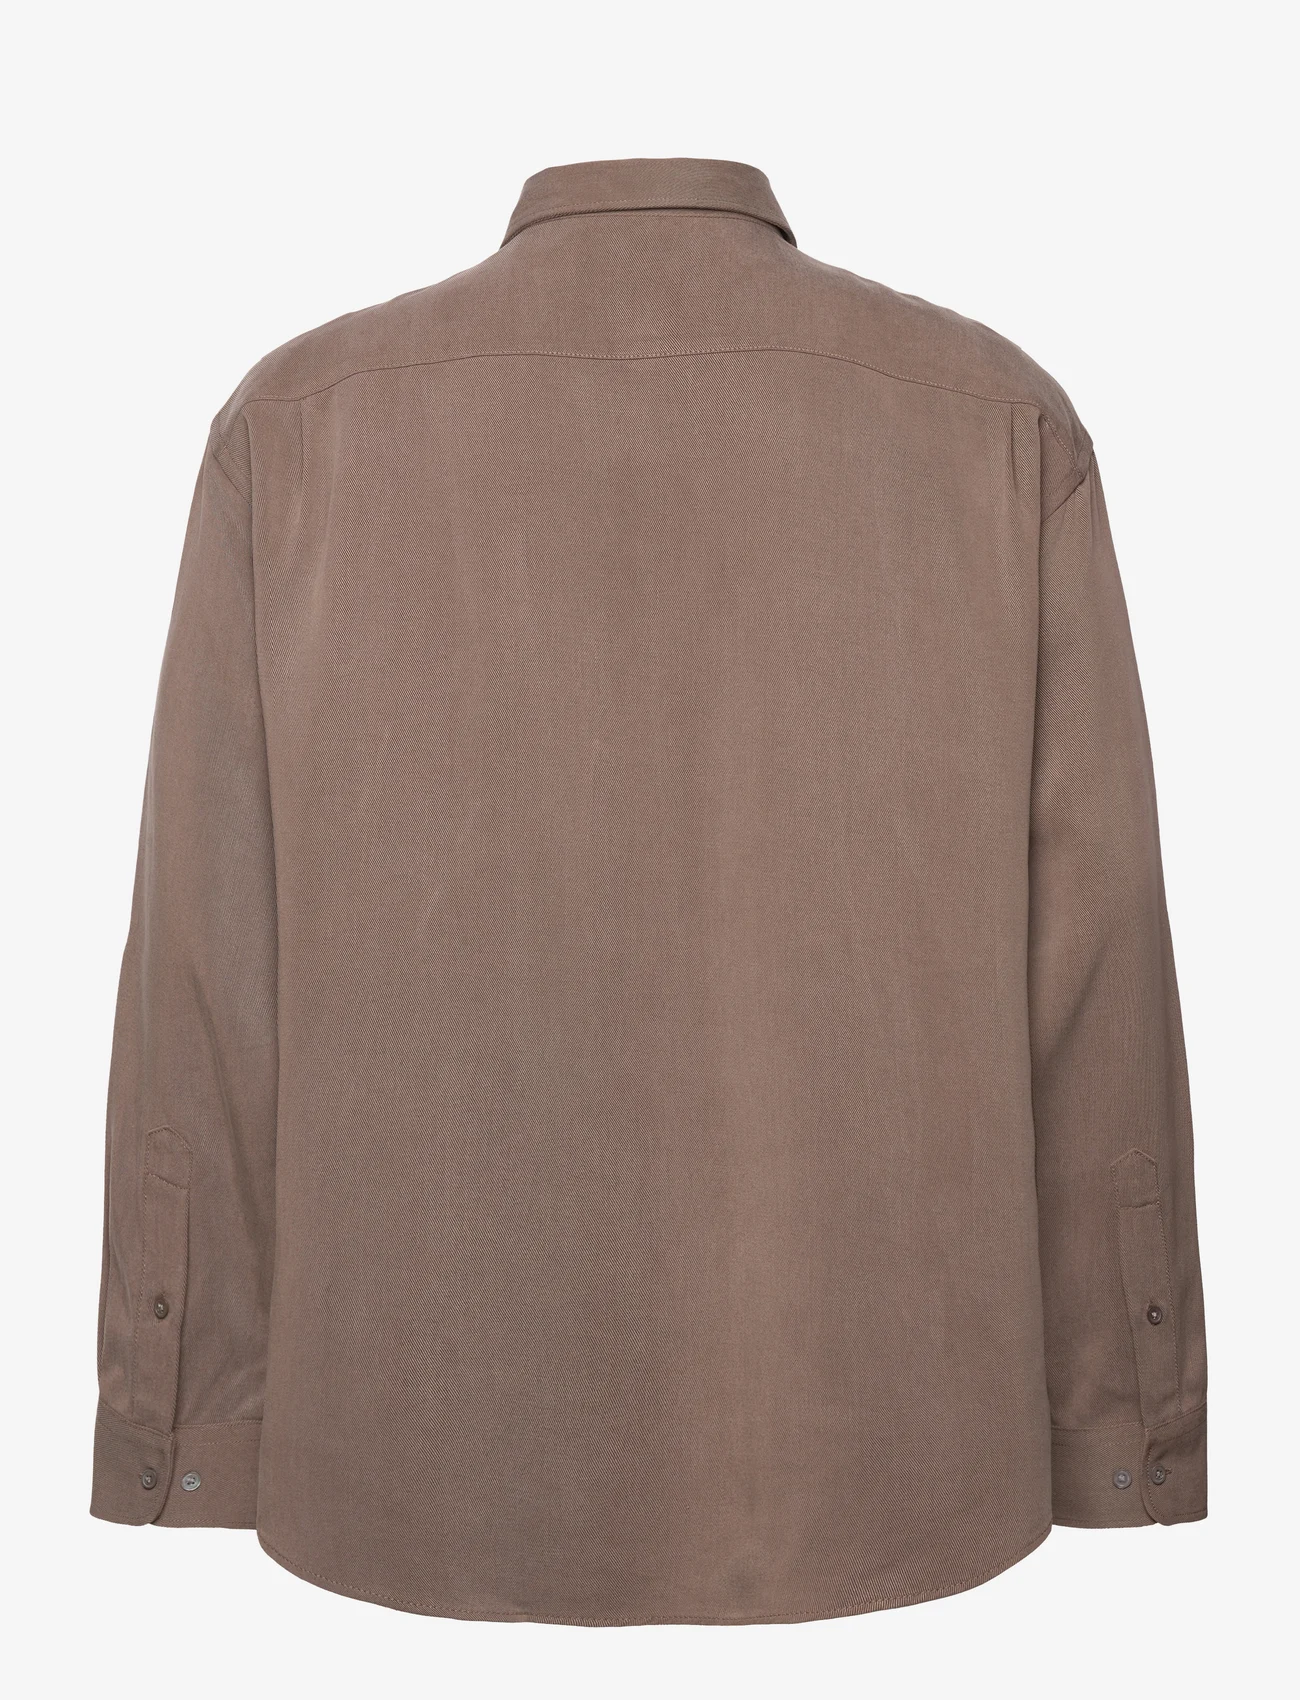 Hope - Oversized Tencel Shirt - basic shirts - mud brown - 1